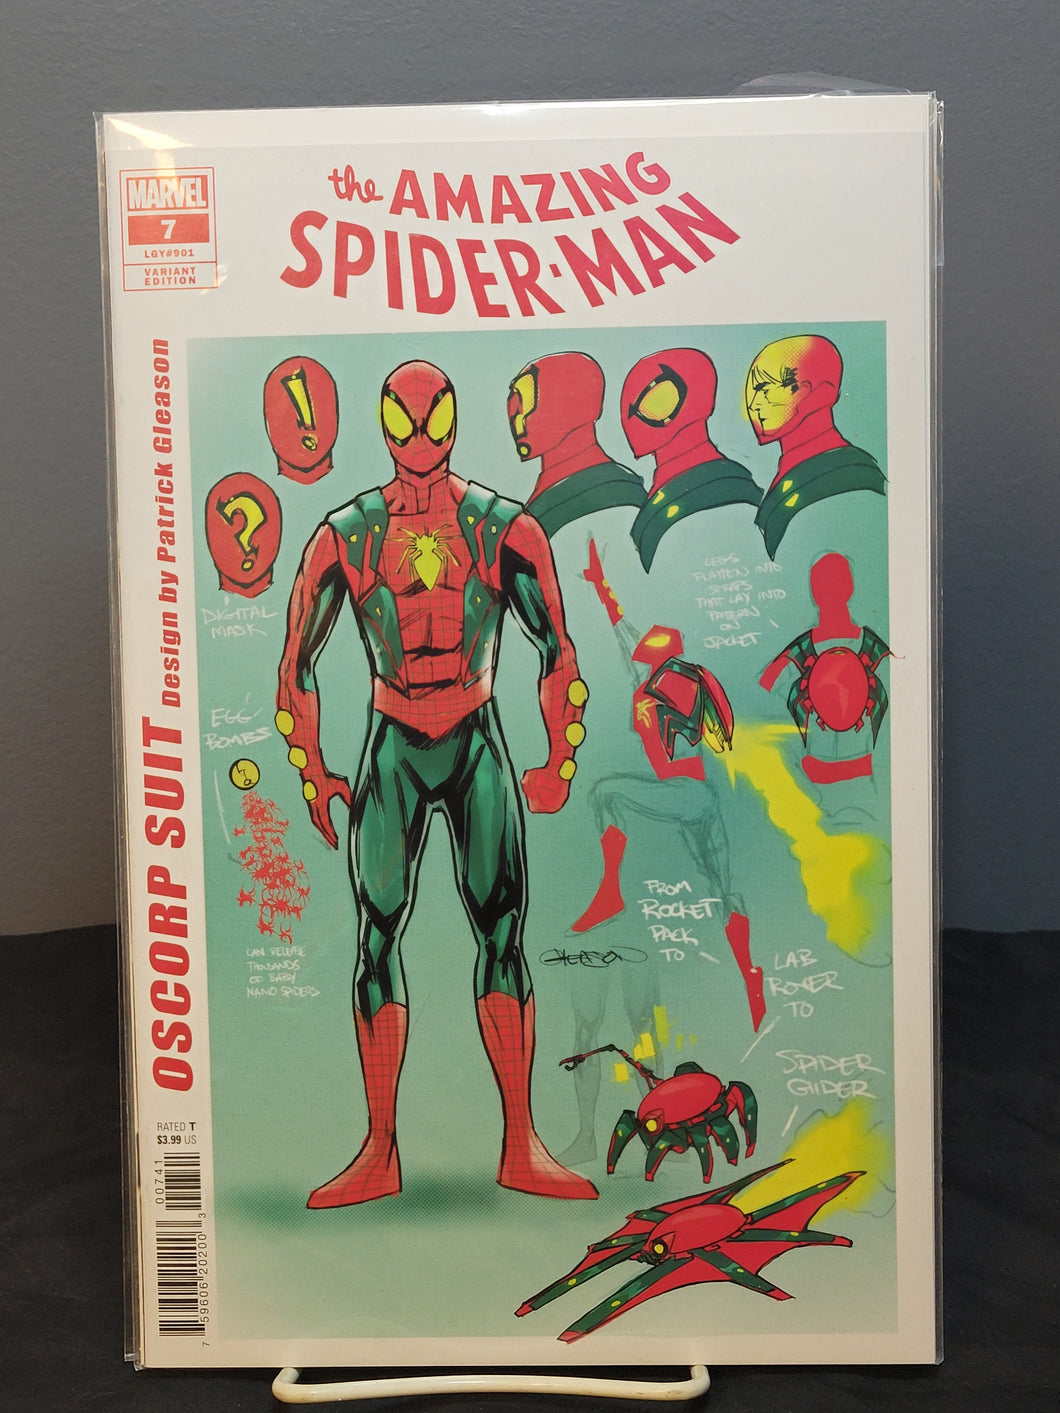 Amazing Spider-Man #7 1:10 Variant